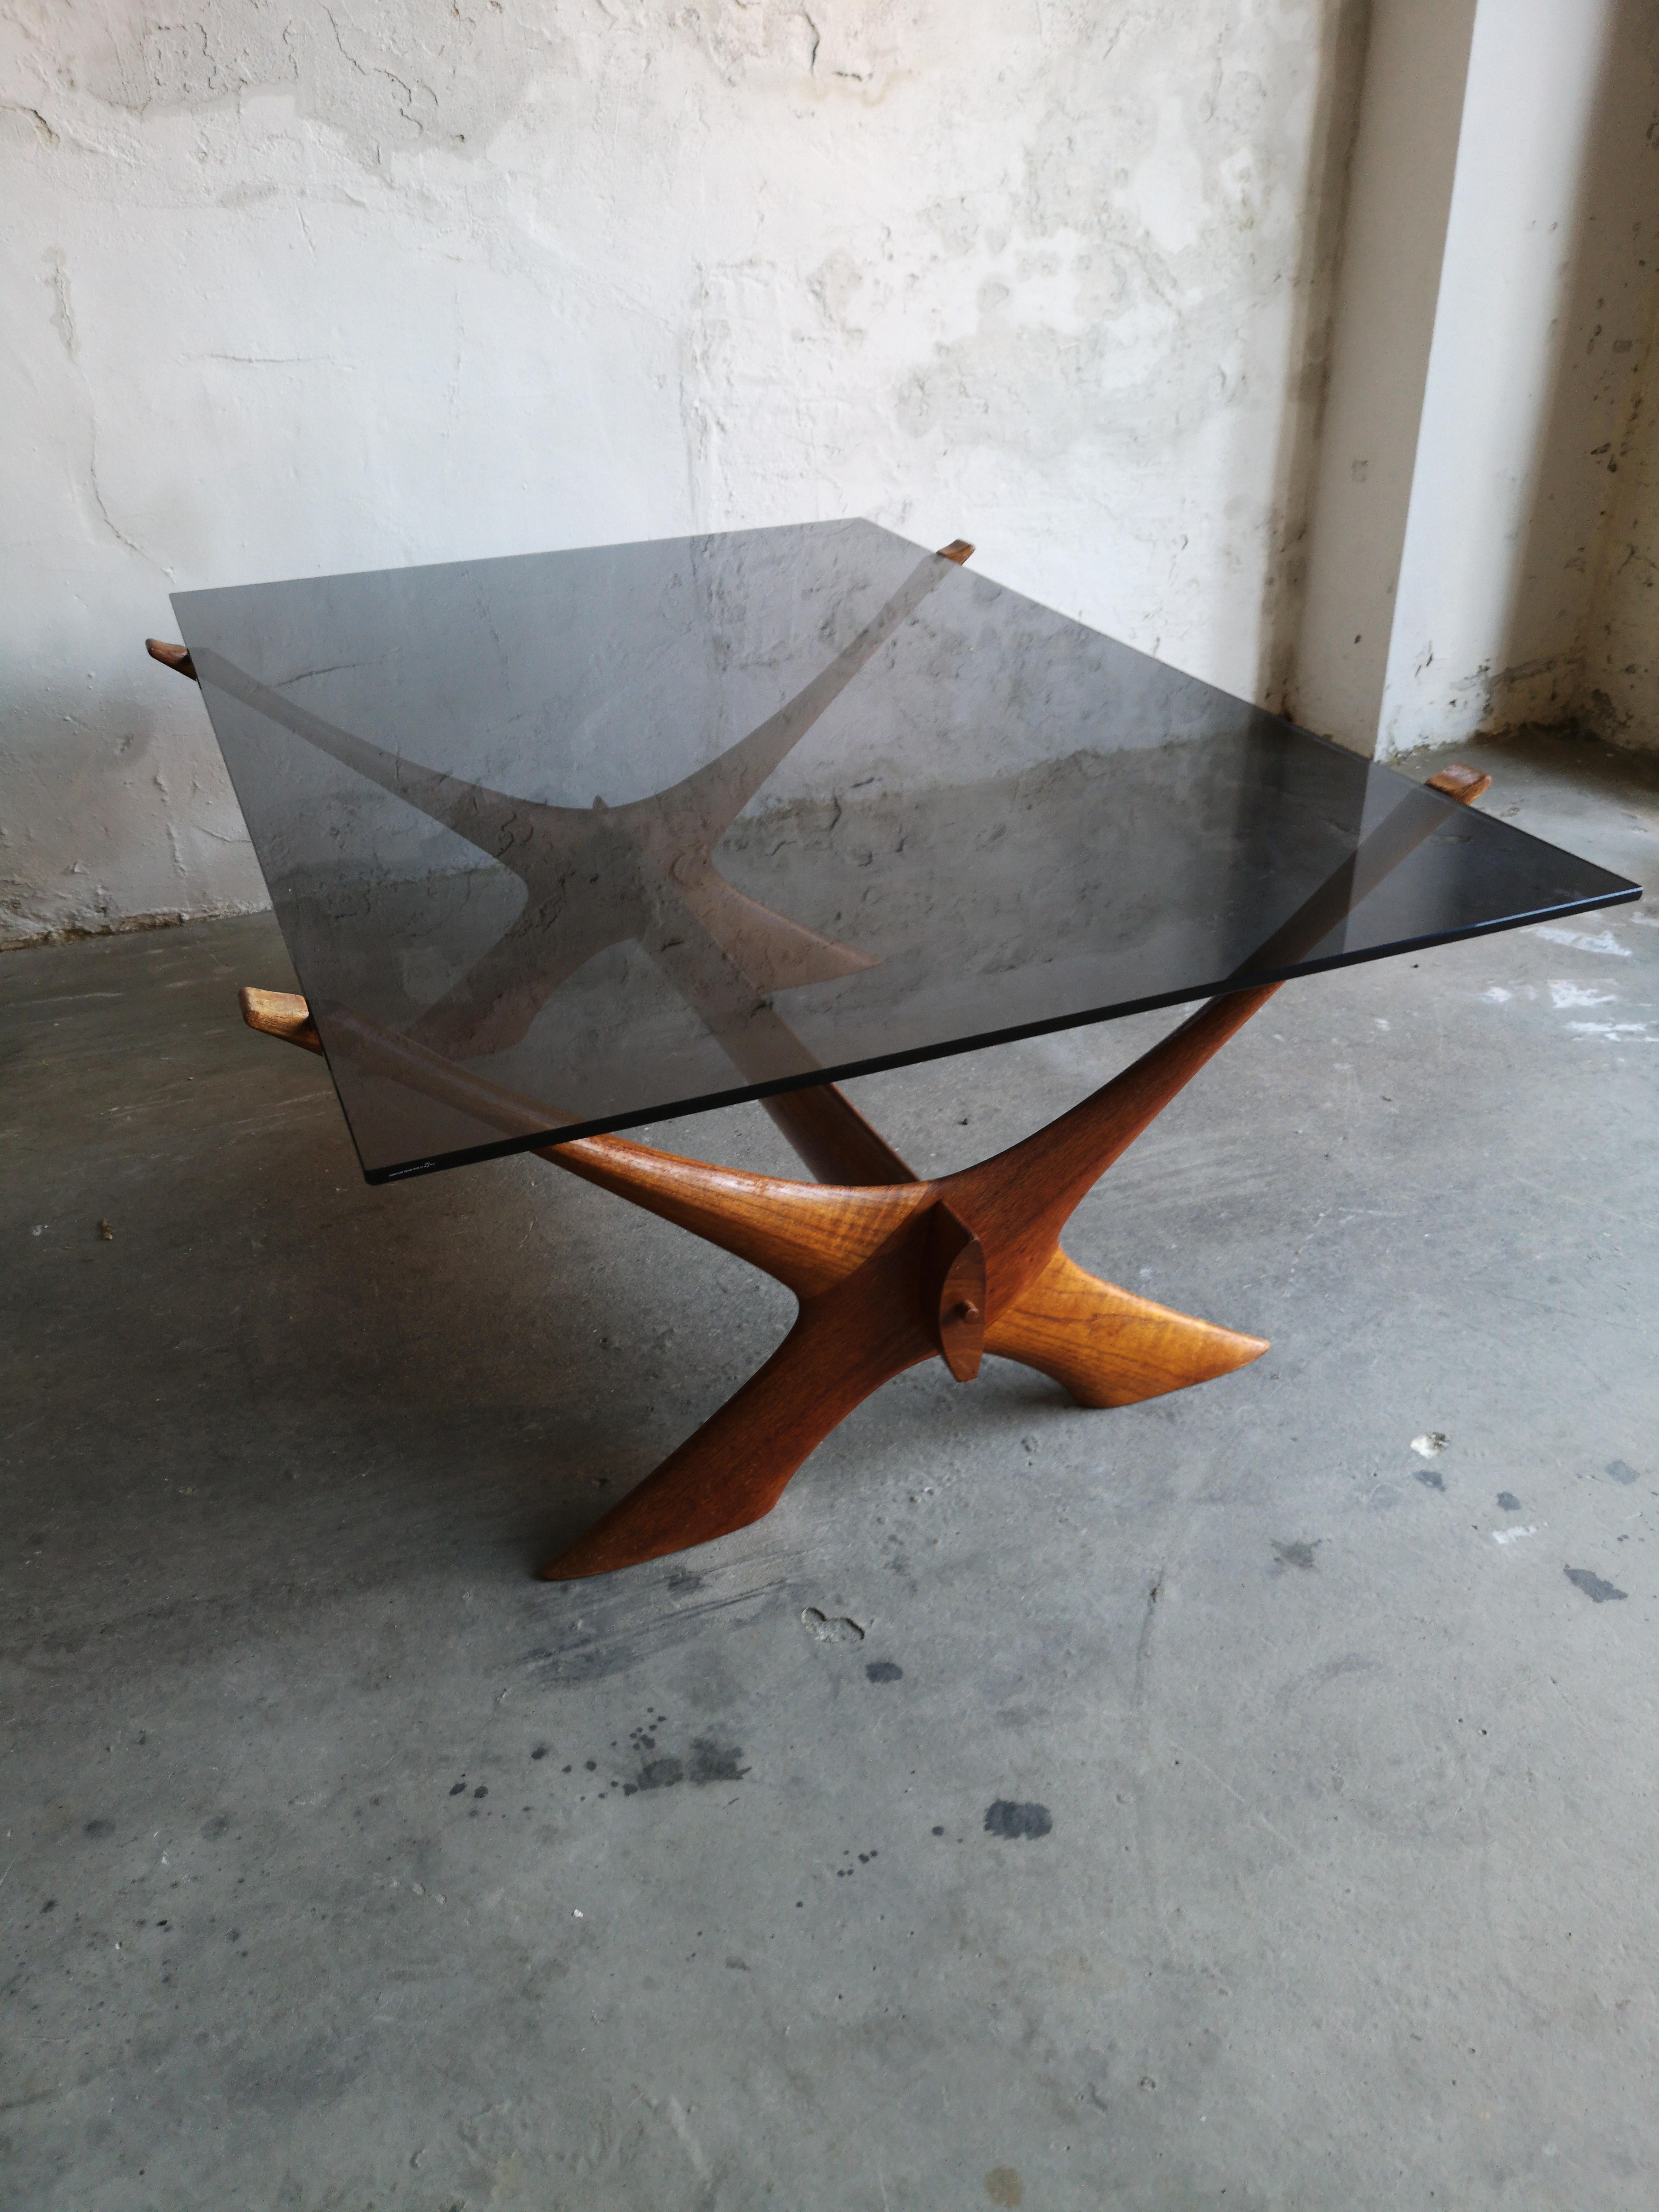 20th Century 'Condor' Teak and Glass Coffee Table, Fredrik Schriever-Abeln